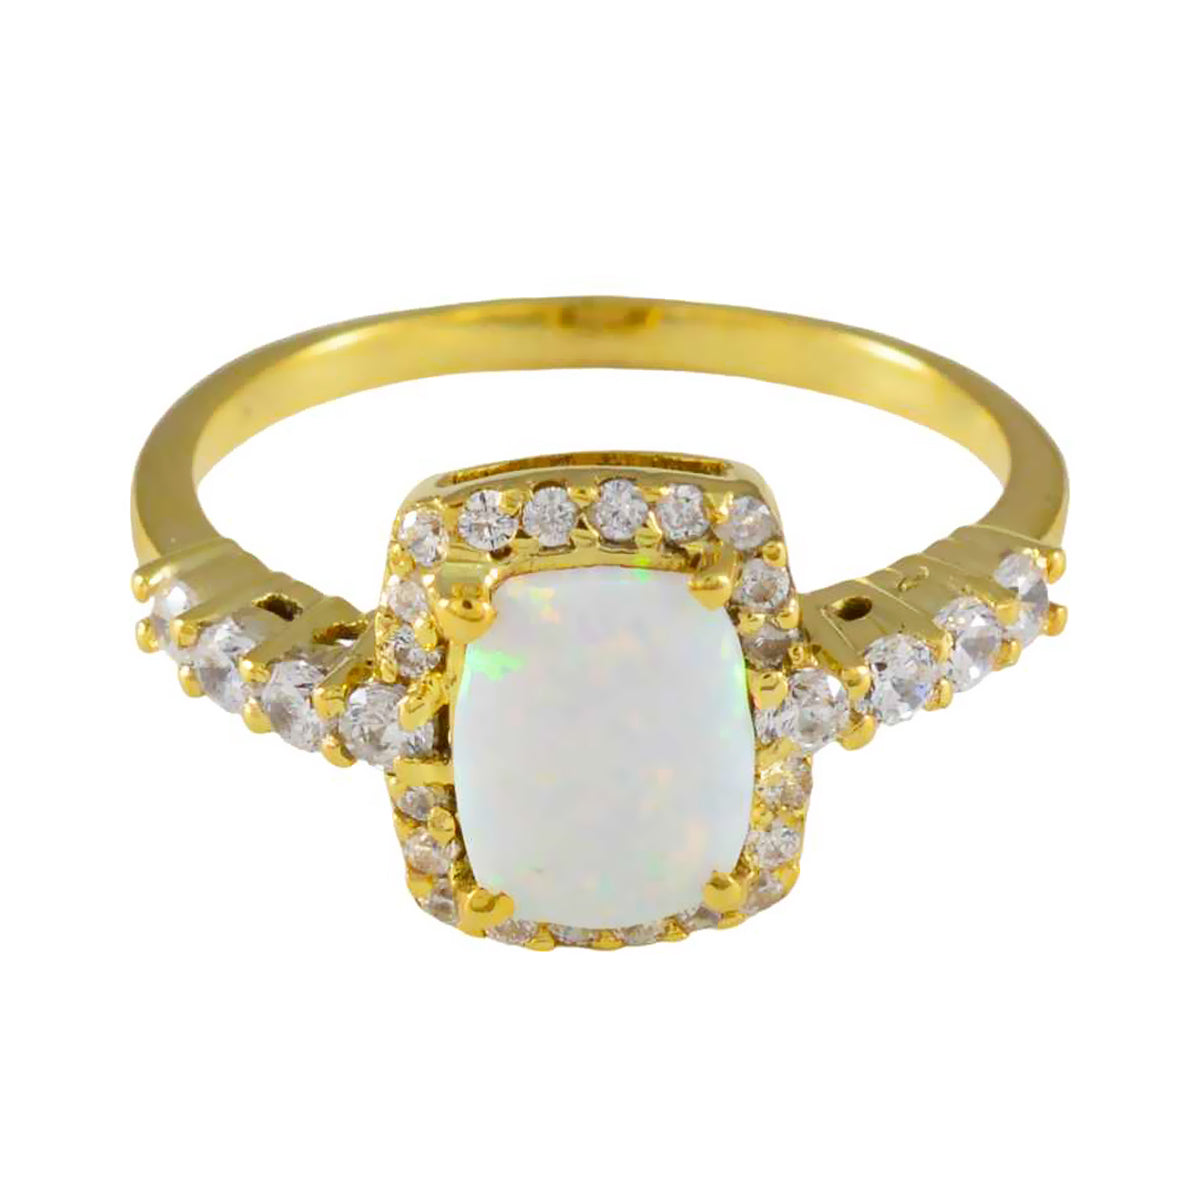 Riyo Prime zilveren ring met geelgouden opaal CZ steen achthoekige vorm Prong setting antieke sieraden verjaardagsring